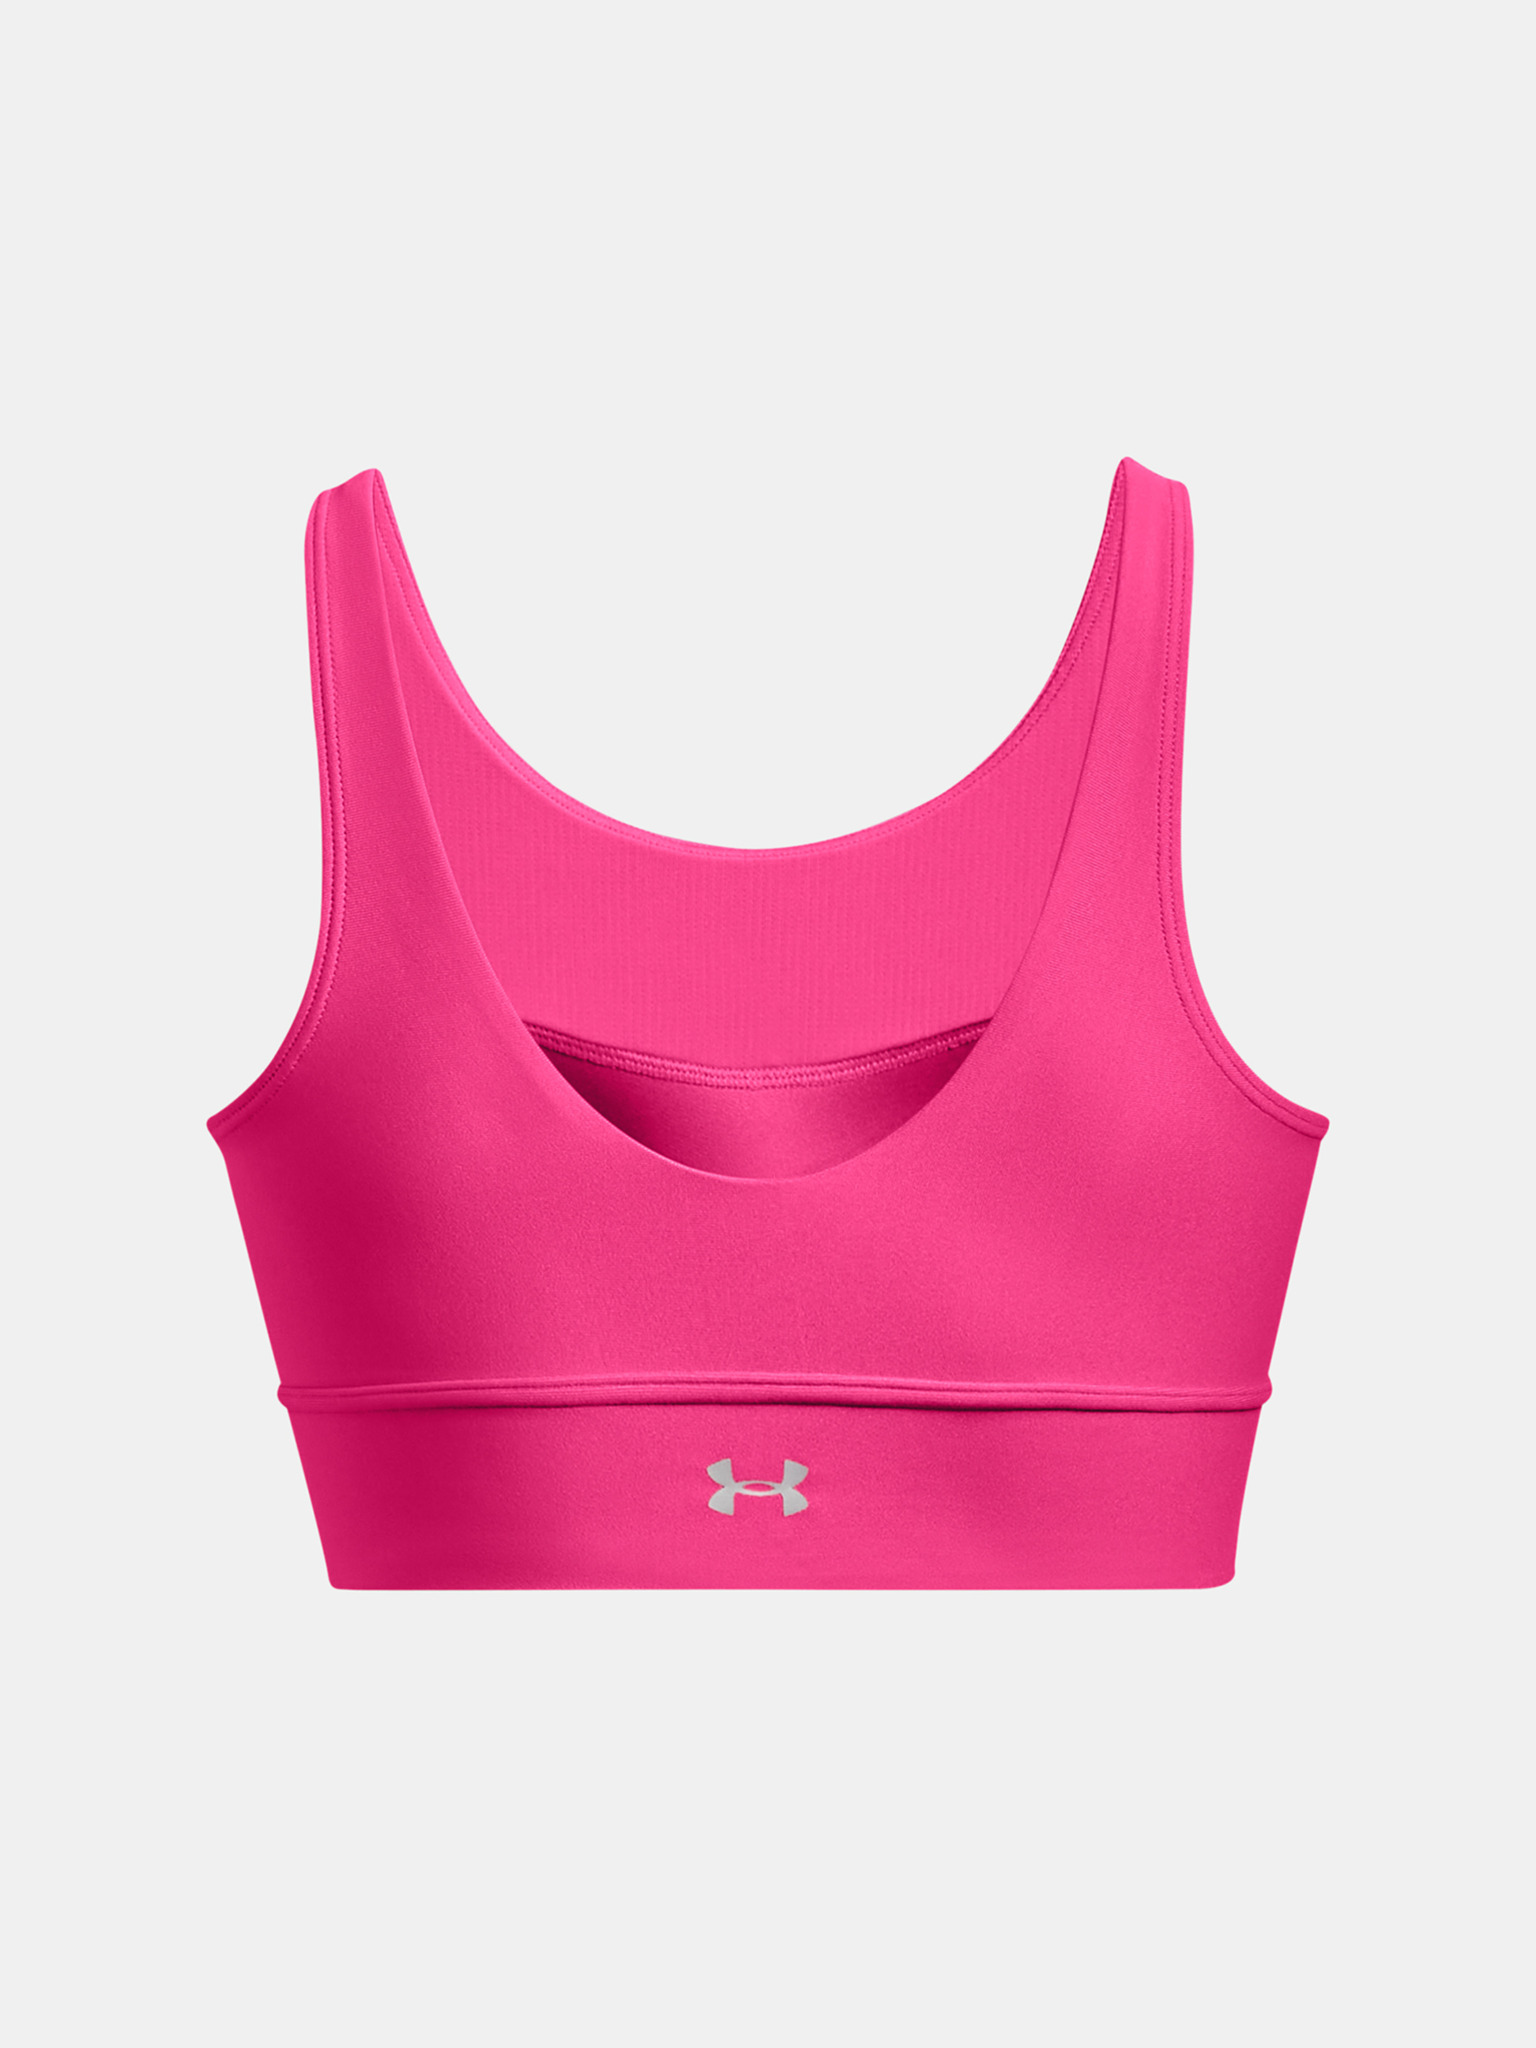  UA HG Armour Mid Padless, Pink - sports bra - UNDER ARMOUR  - 23.43 € - outdoorové oblečení a vybavení shop